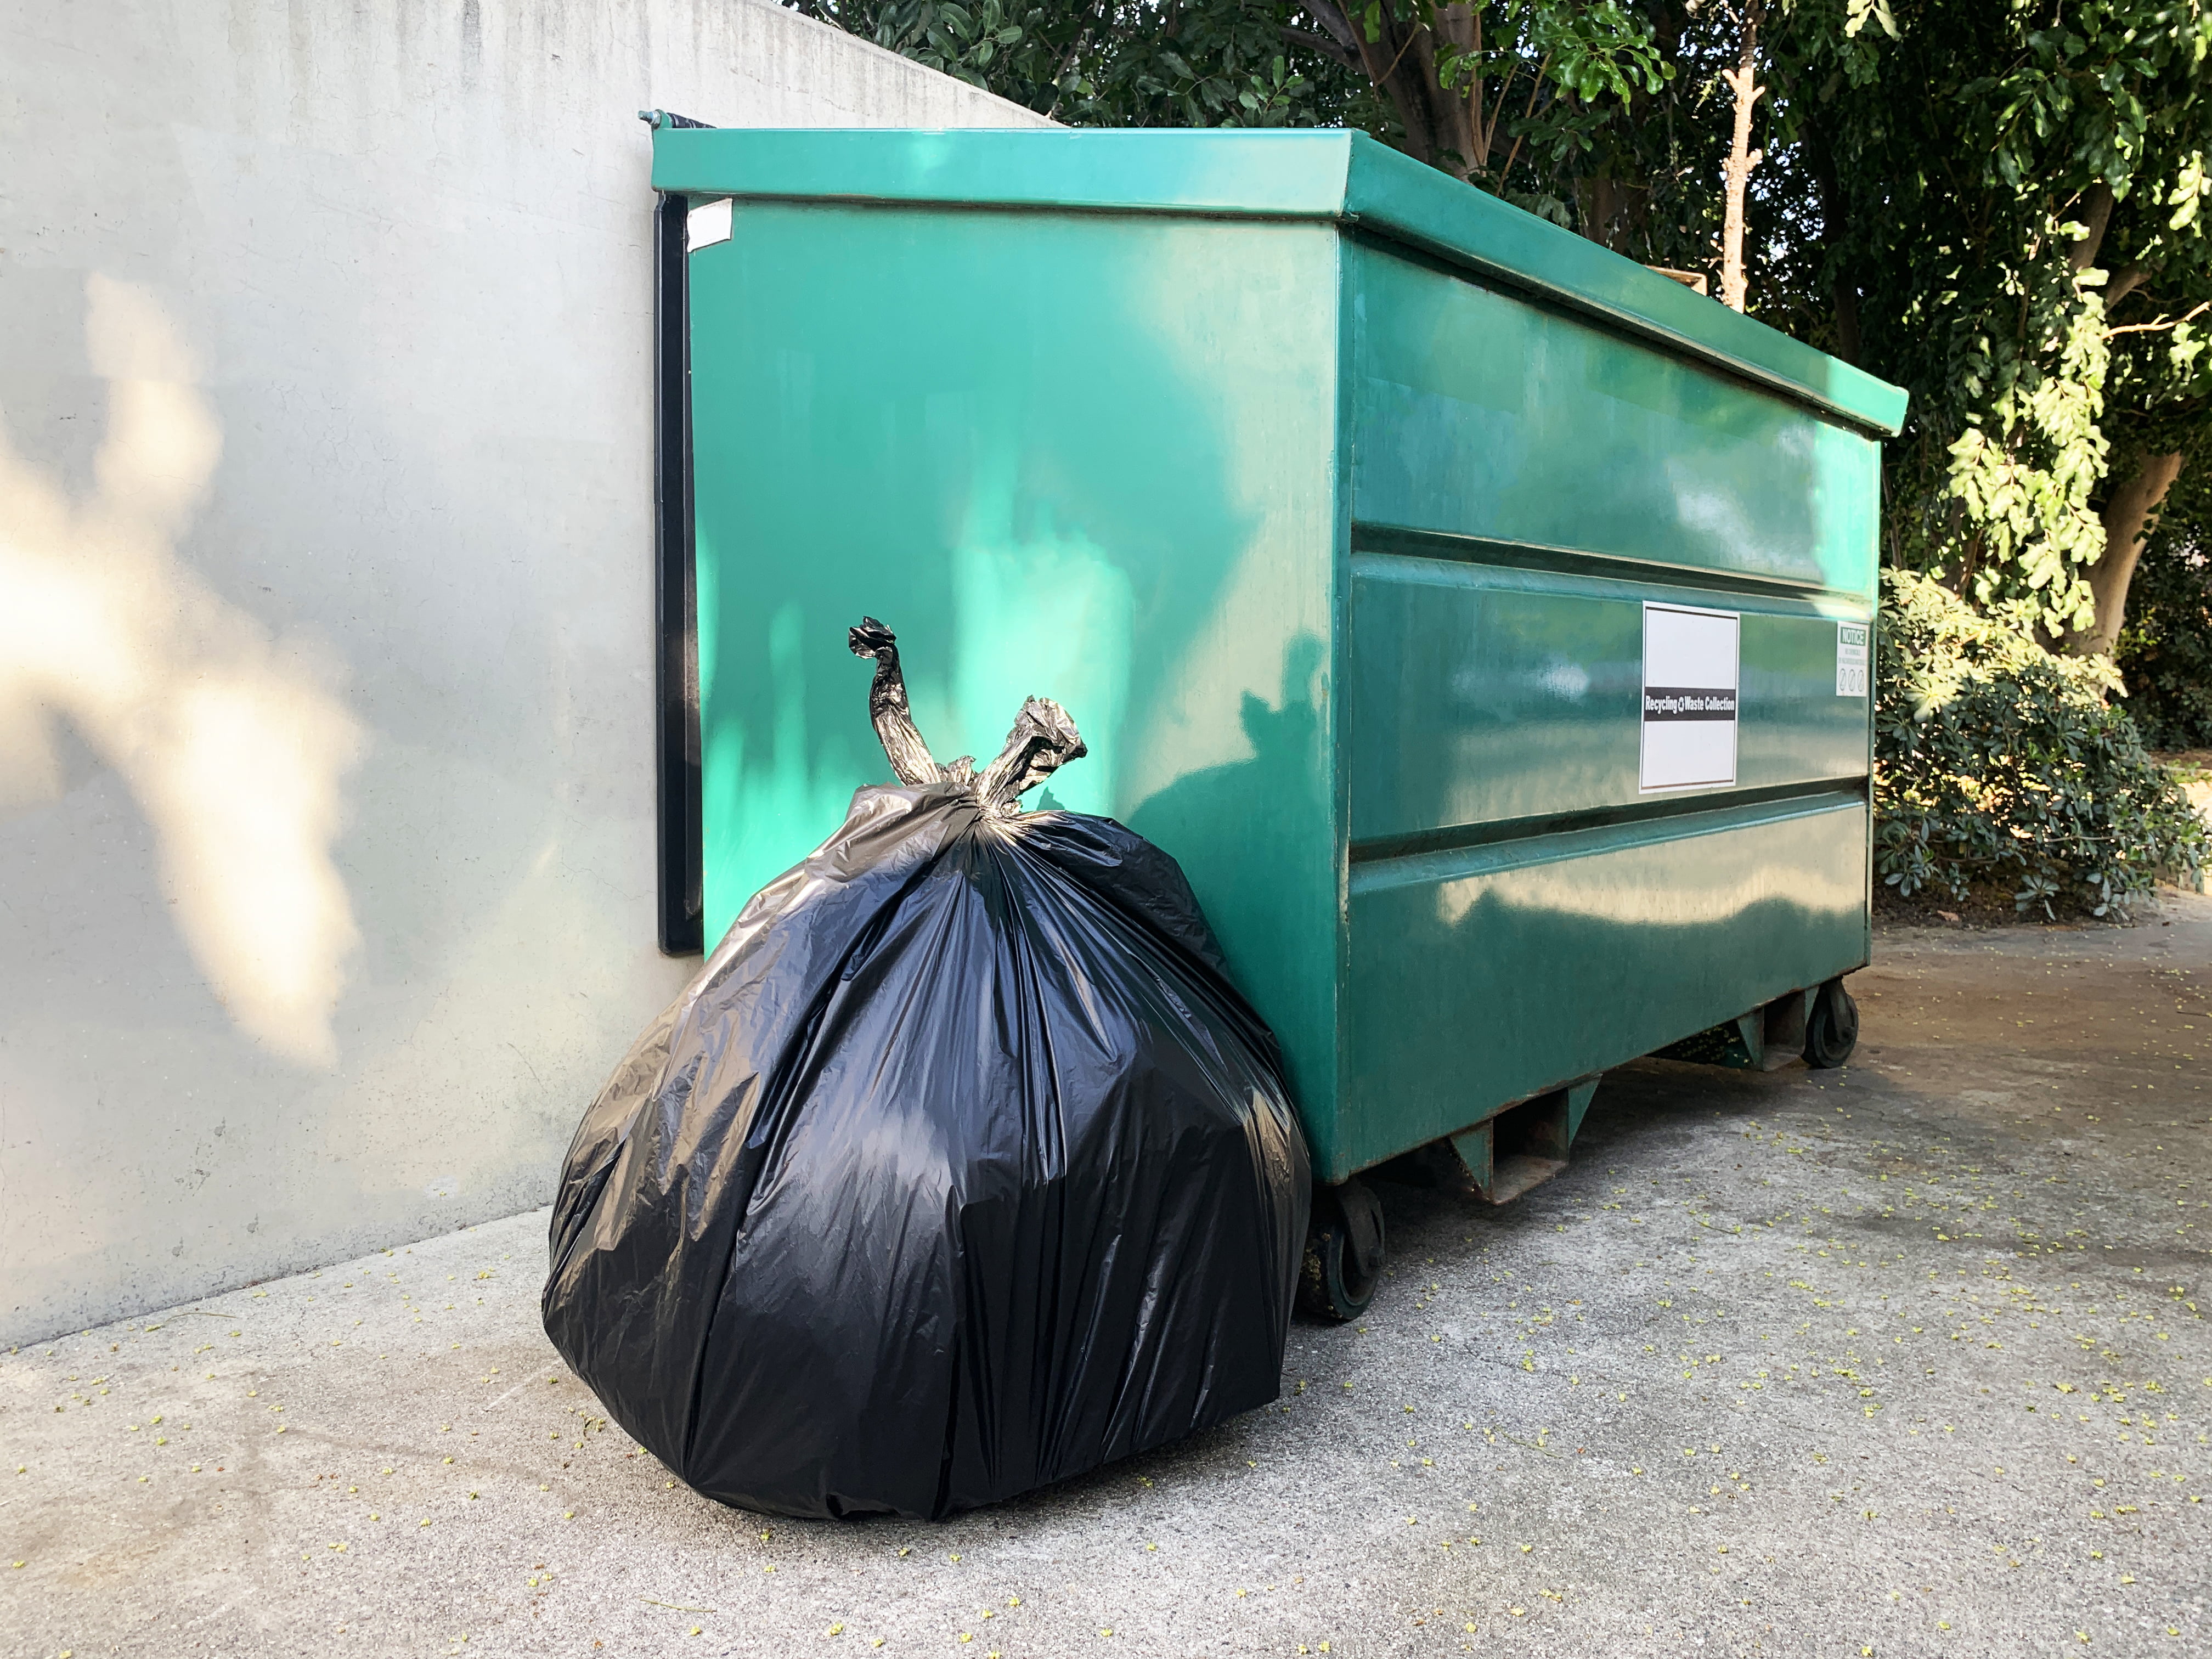 64-65 Gallon Black Trash Bags, (120 Bags Bulk) 60 Gallon Extra